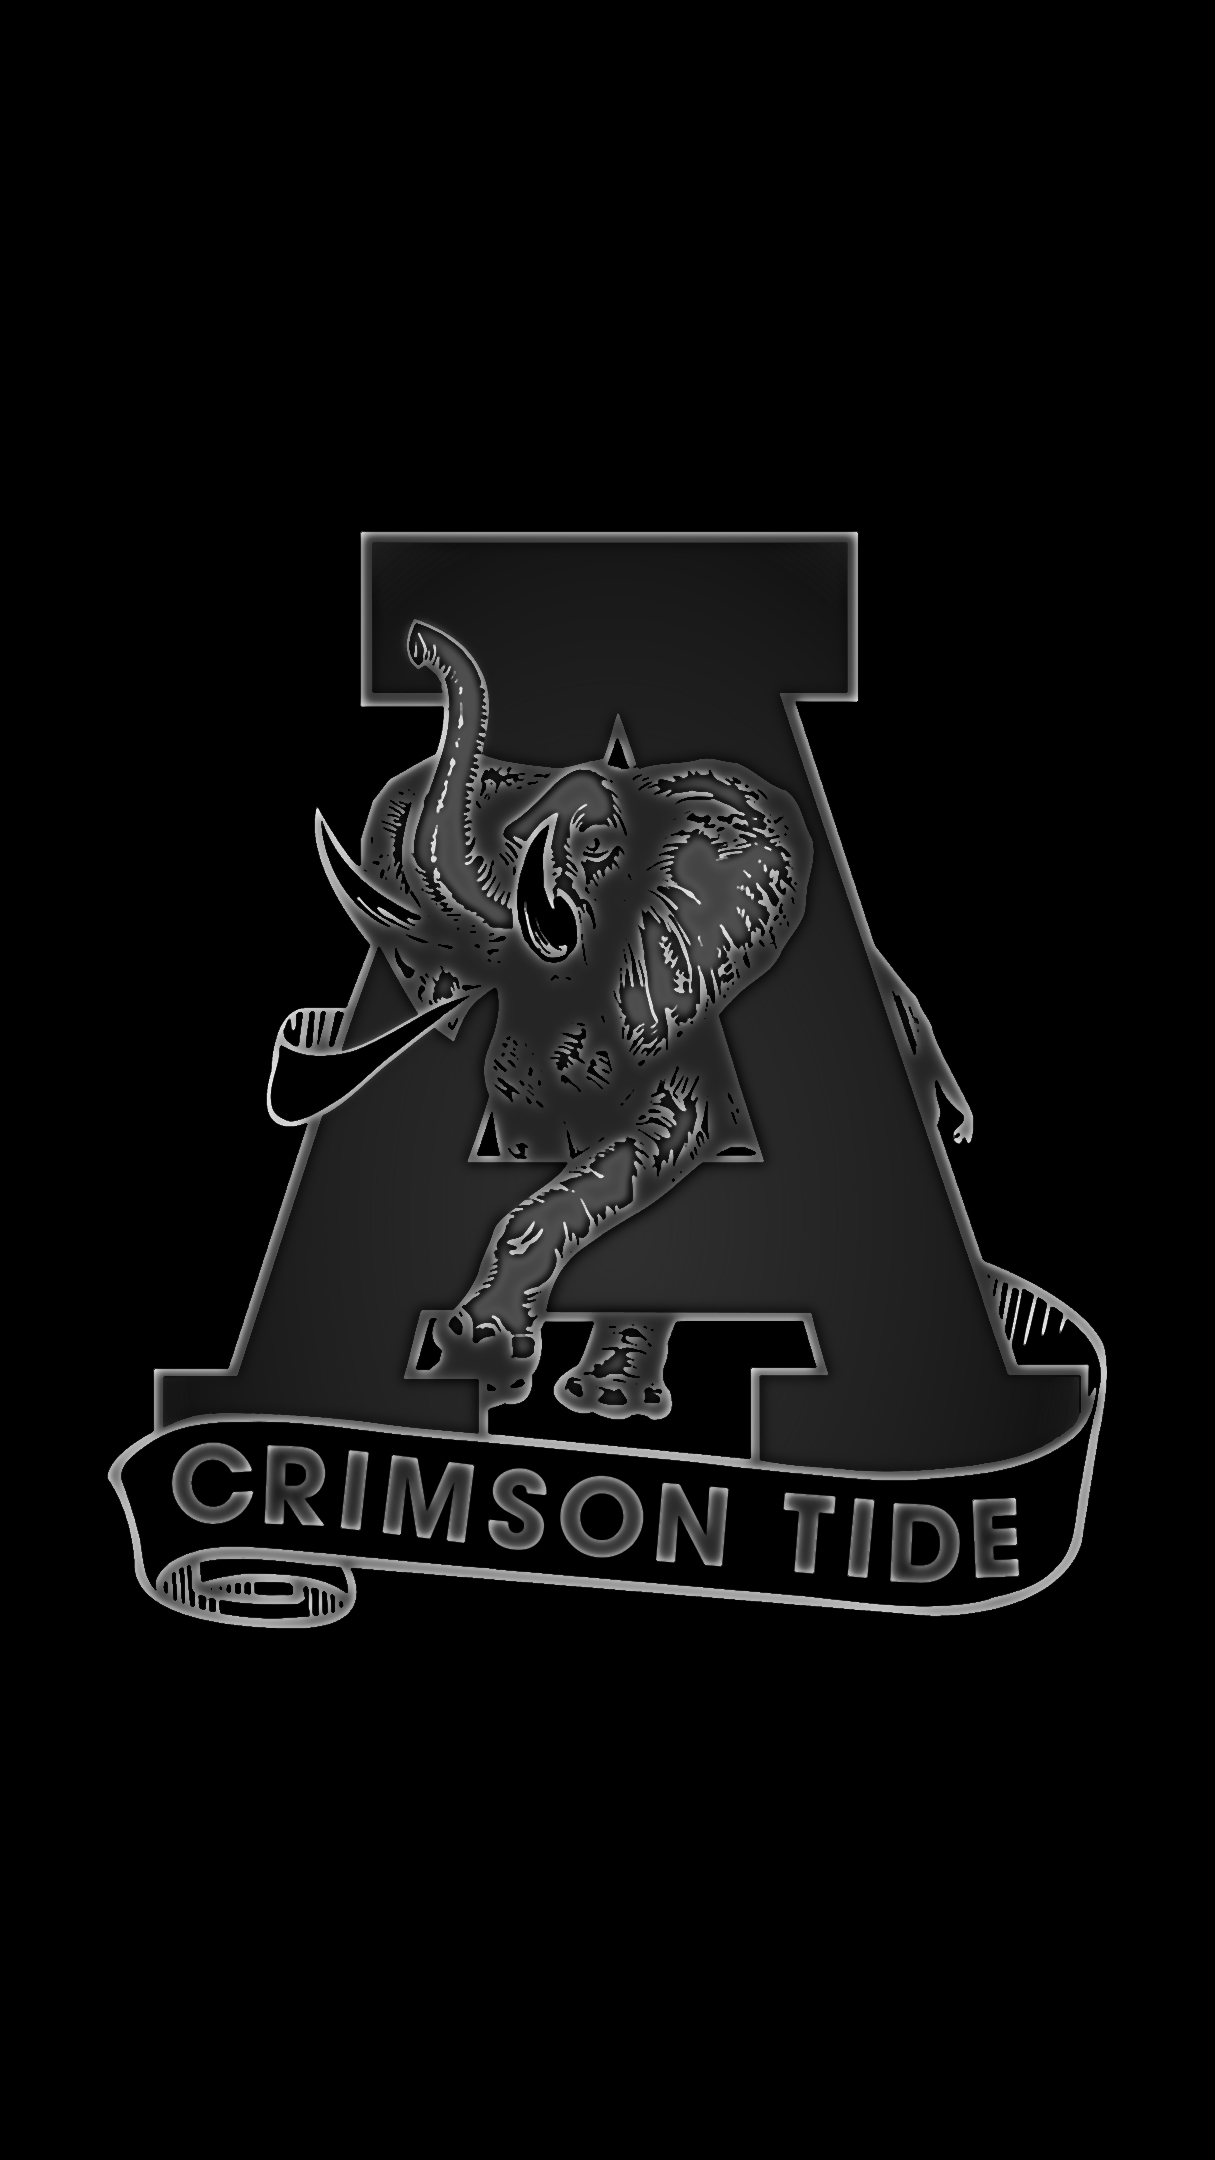 1215x2160 Alabama Crimson Tide Football Logo Wallpaper iPhone Android ROLL TIDE | Alabama crimson tide logo, Alabama crimson tide, Alabama crimson tide football